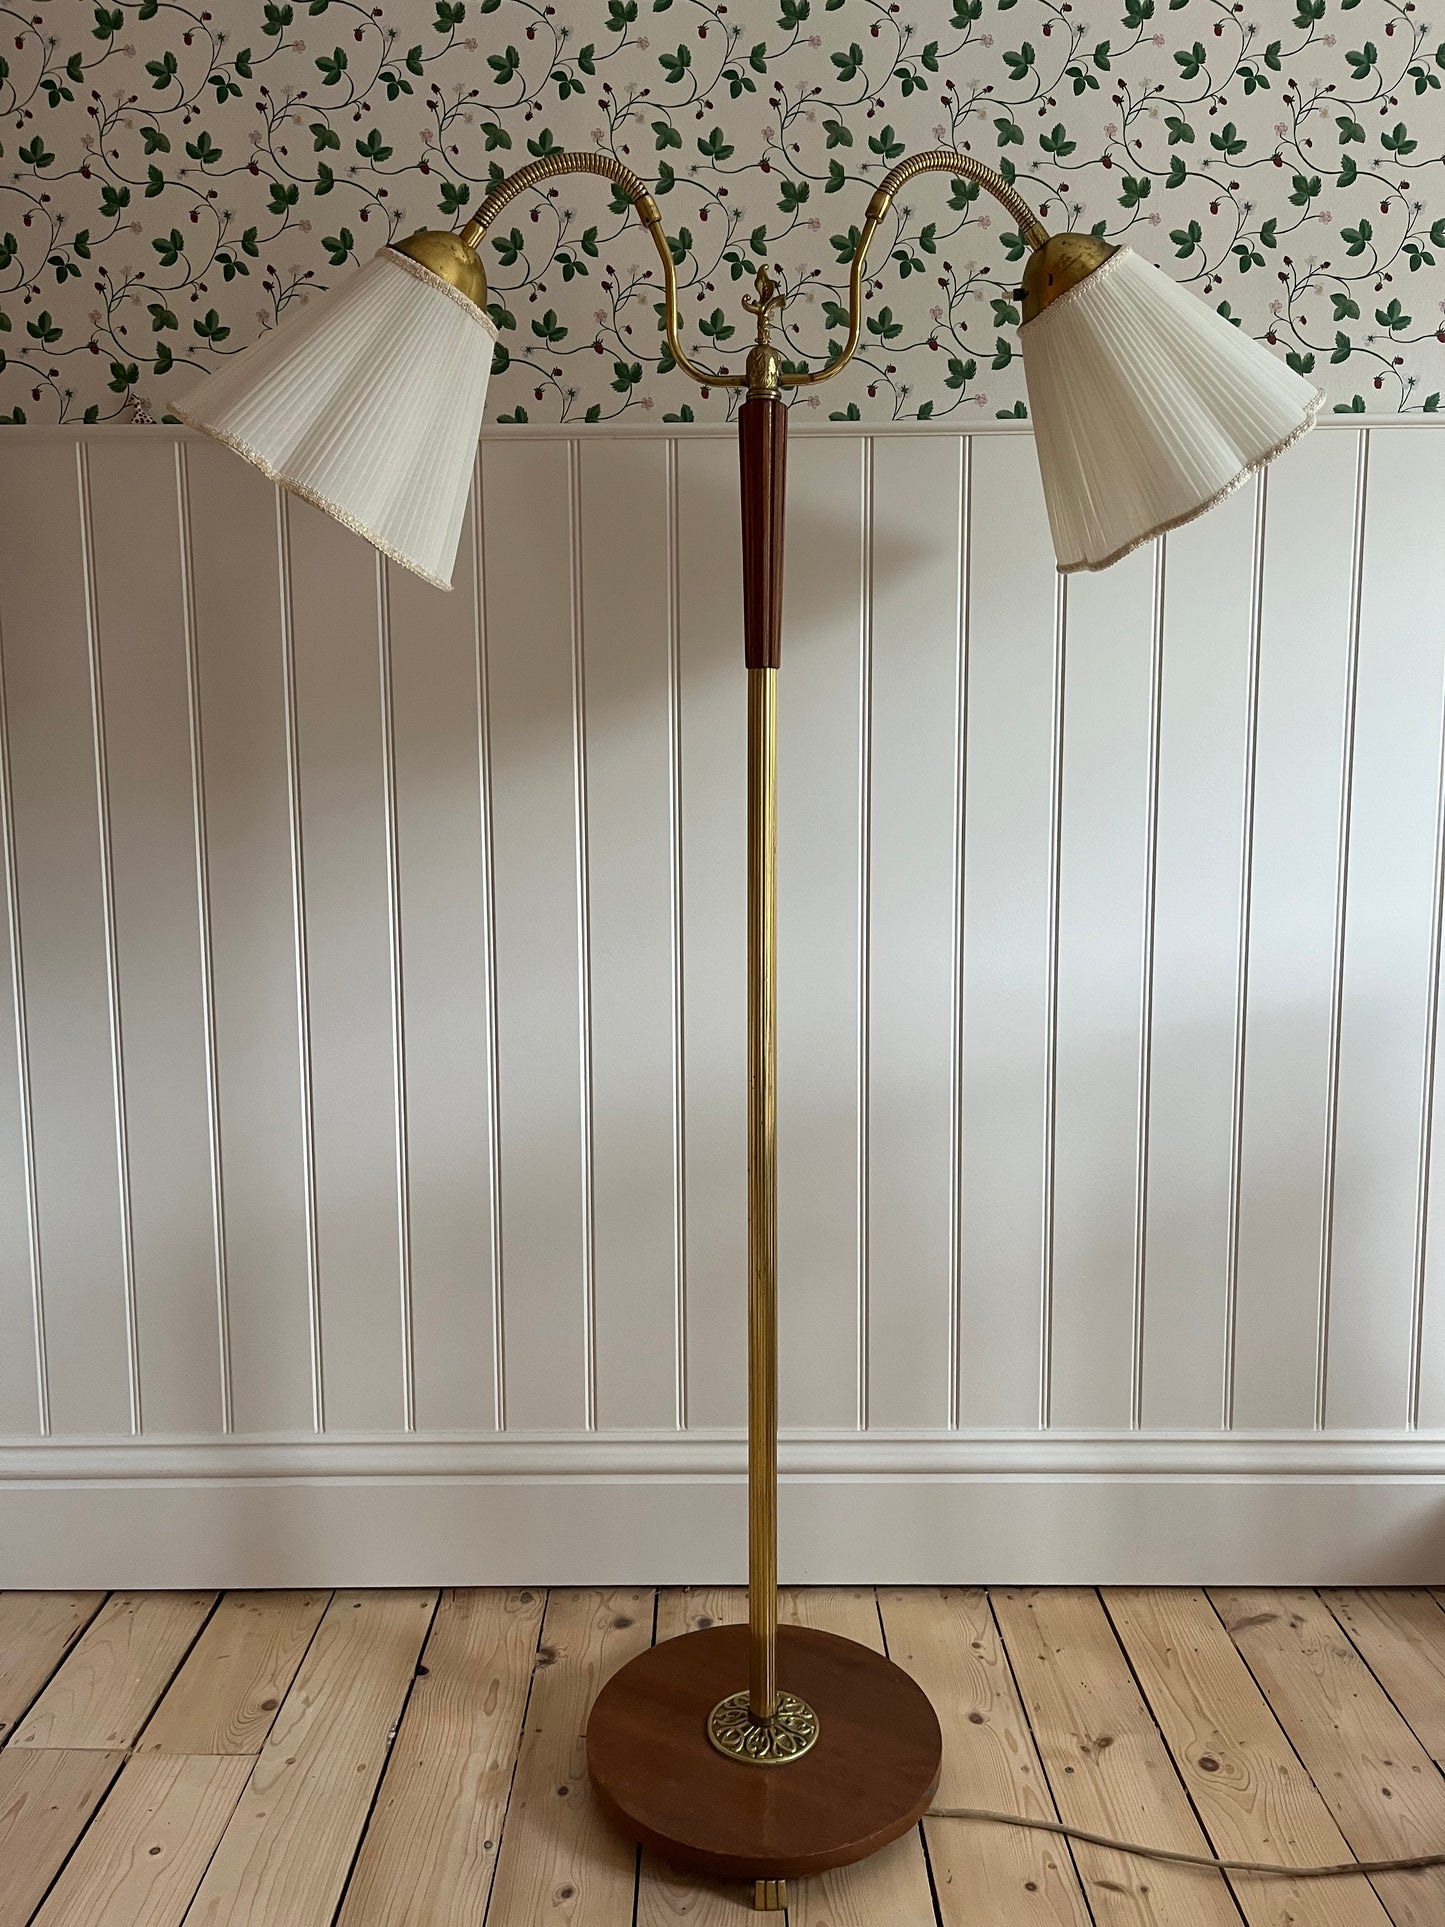 Swedish floor lamp